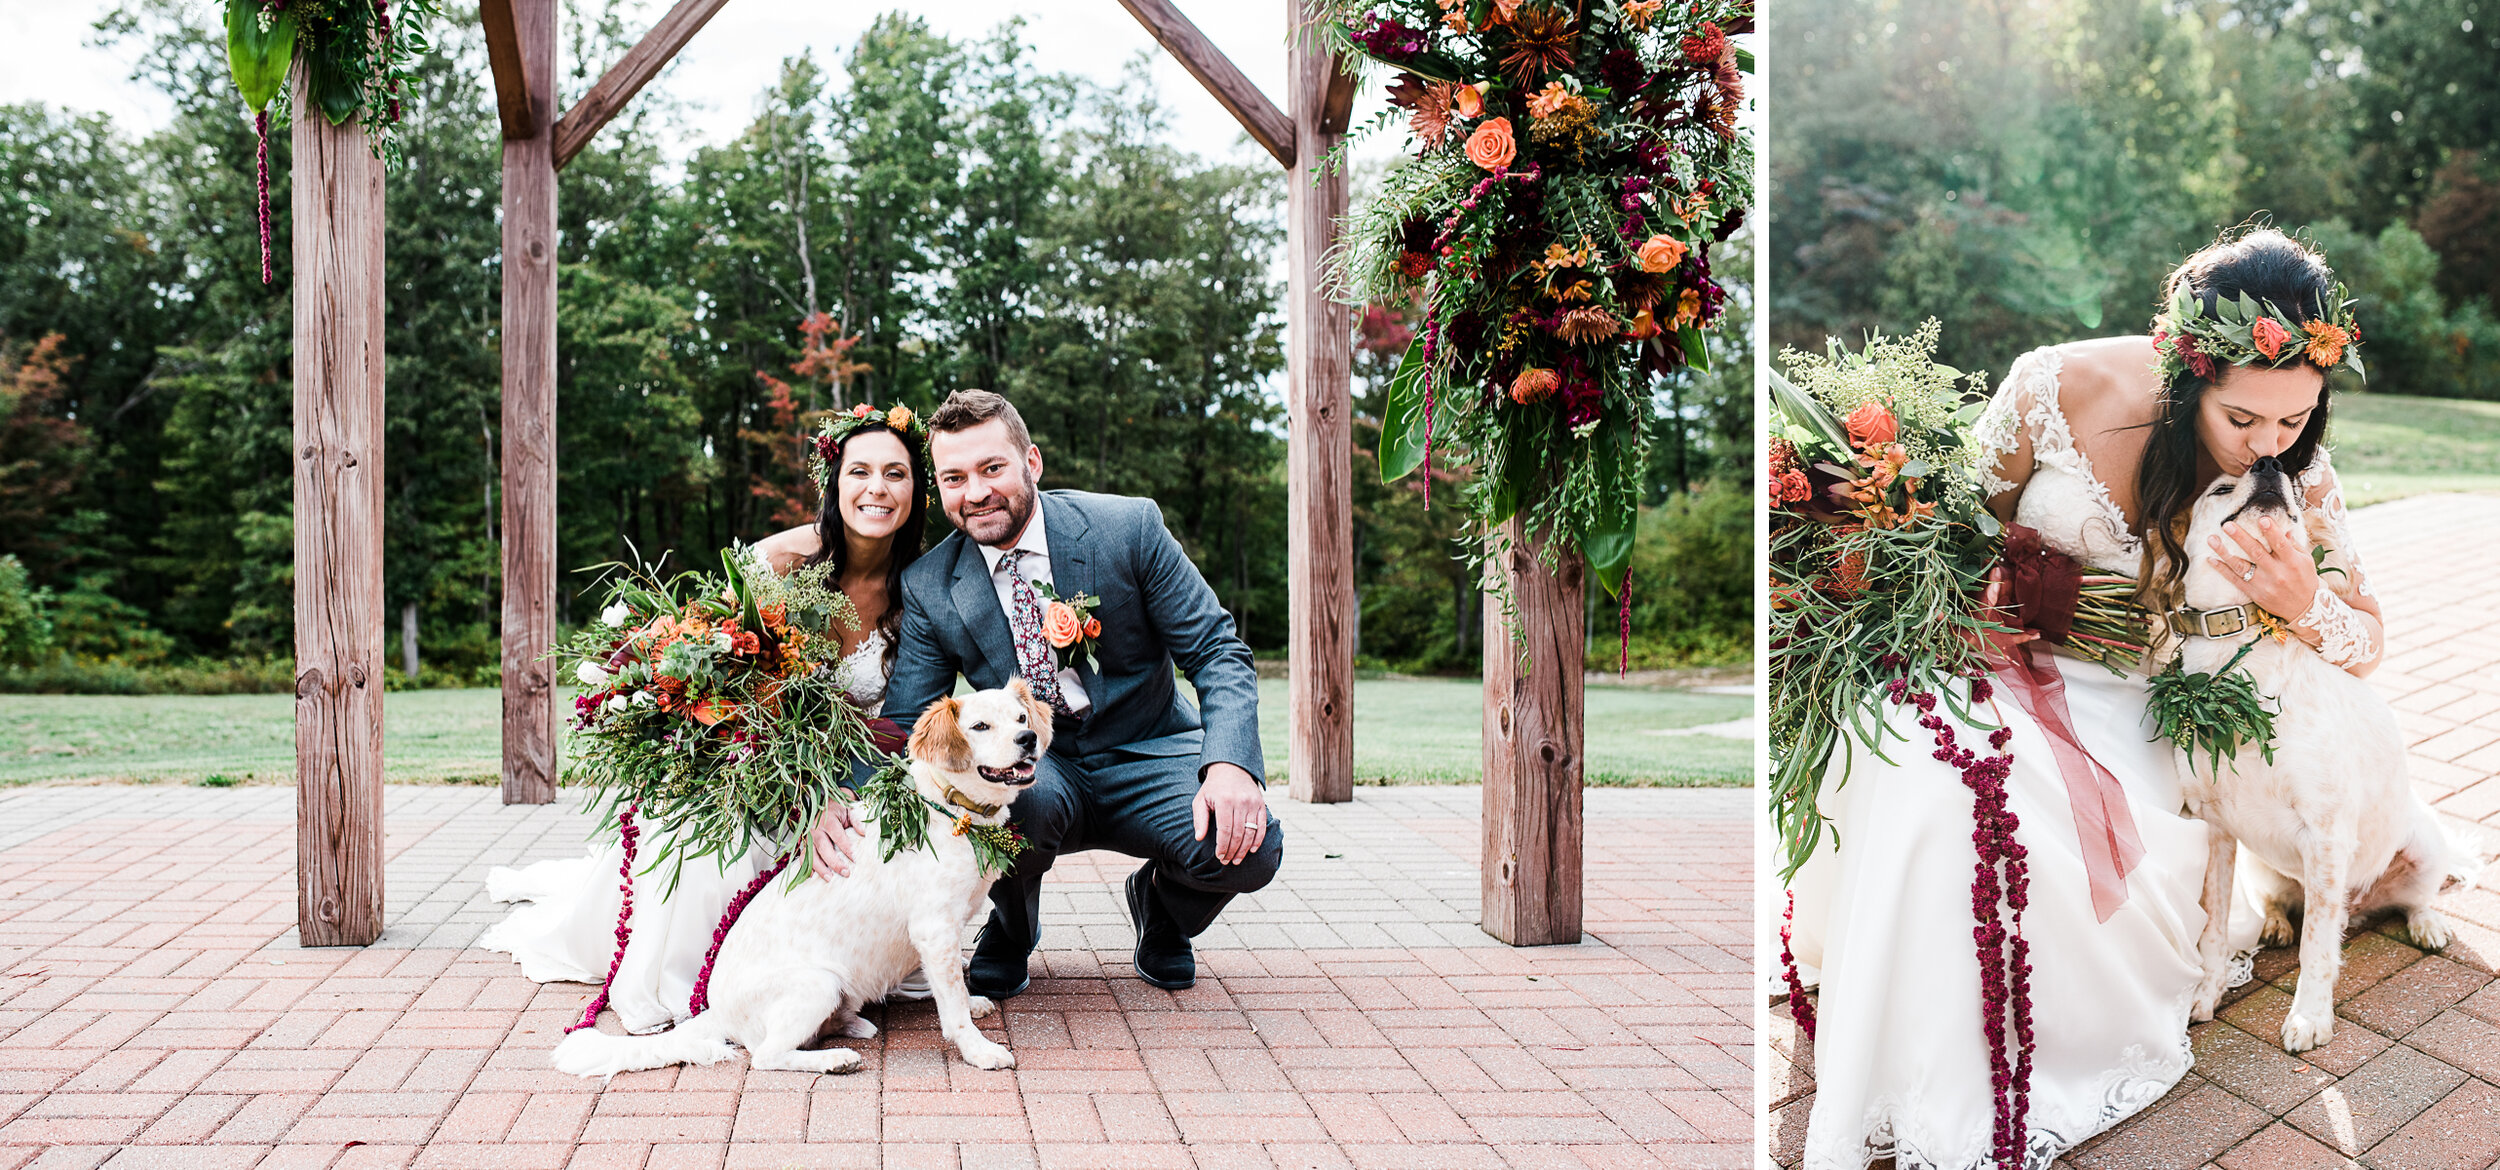 bridal couple with dog wedding photos.jpg